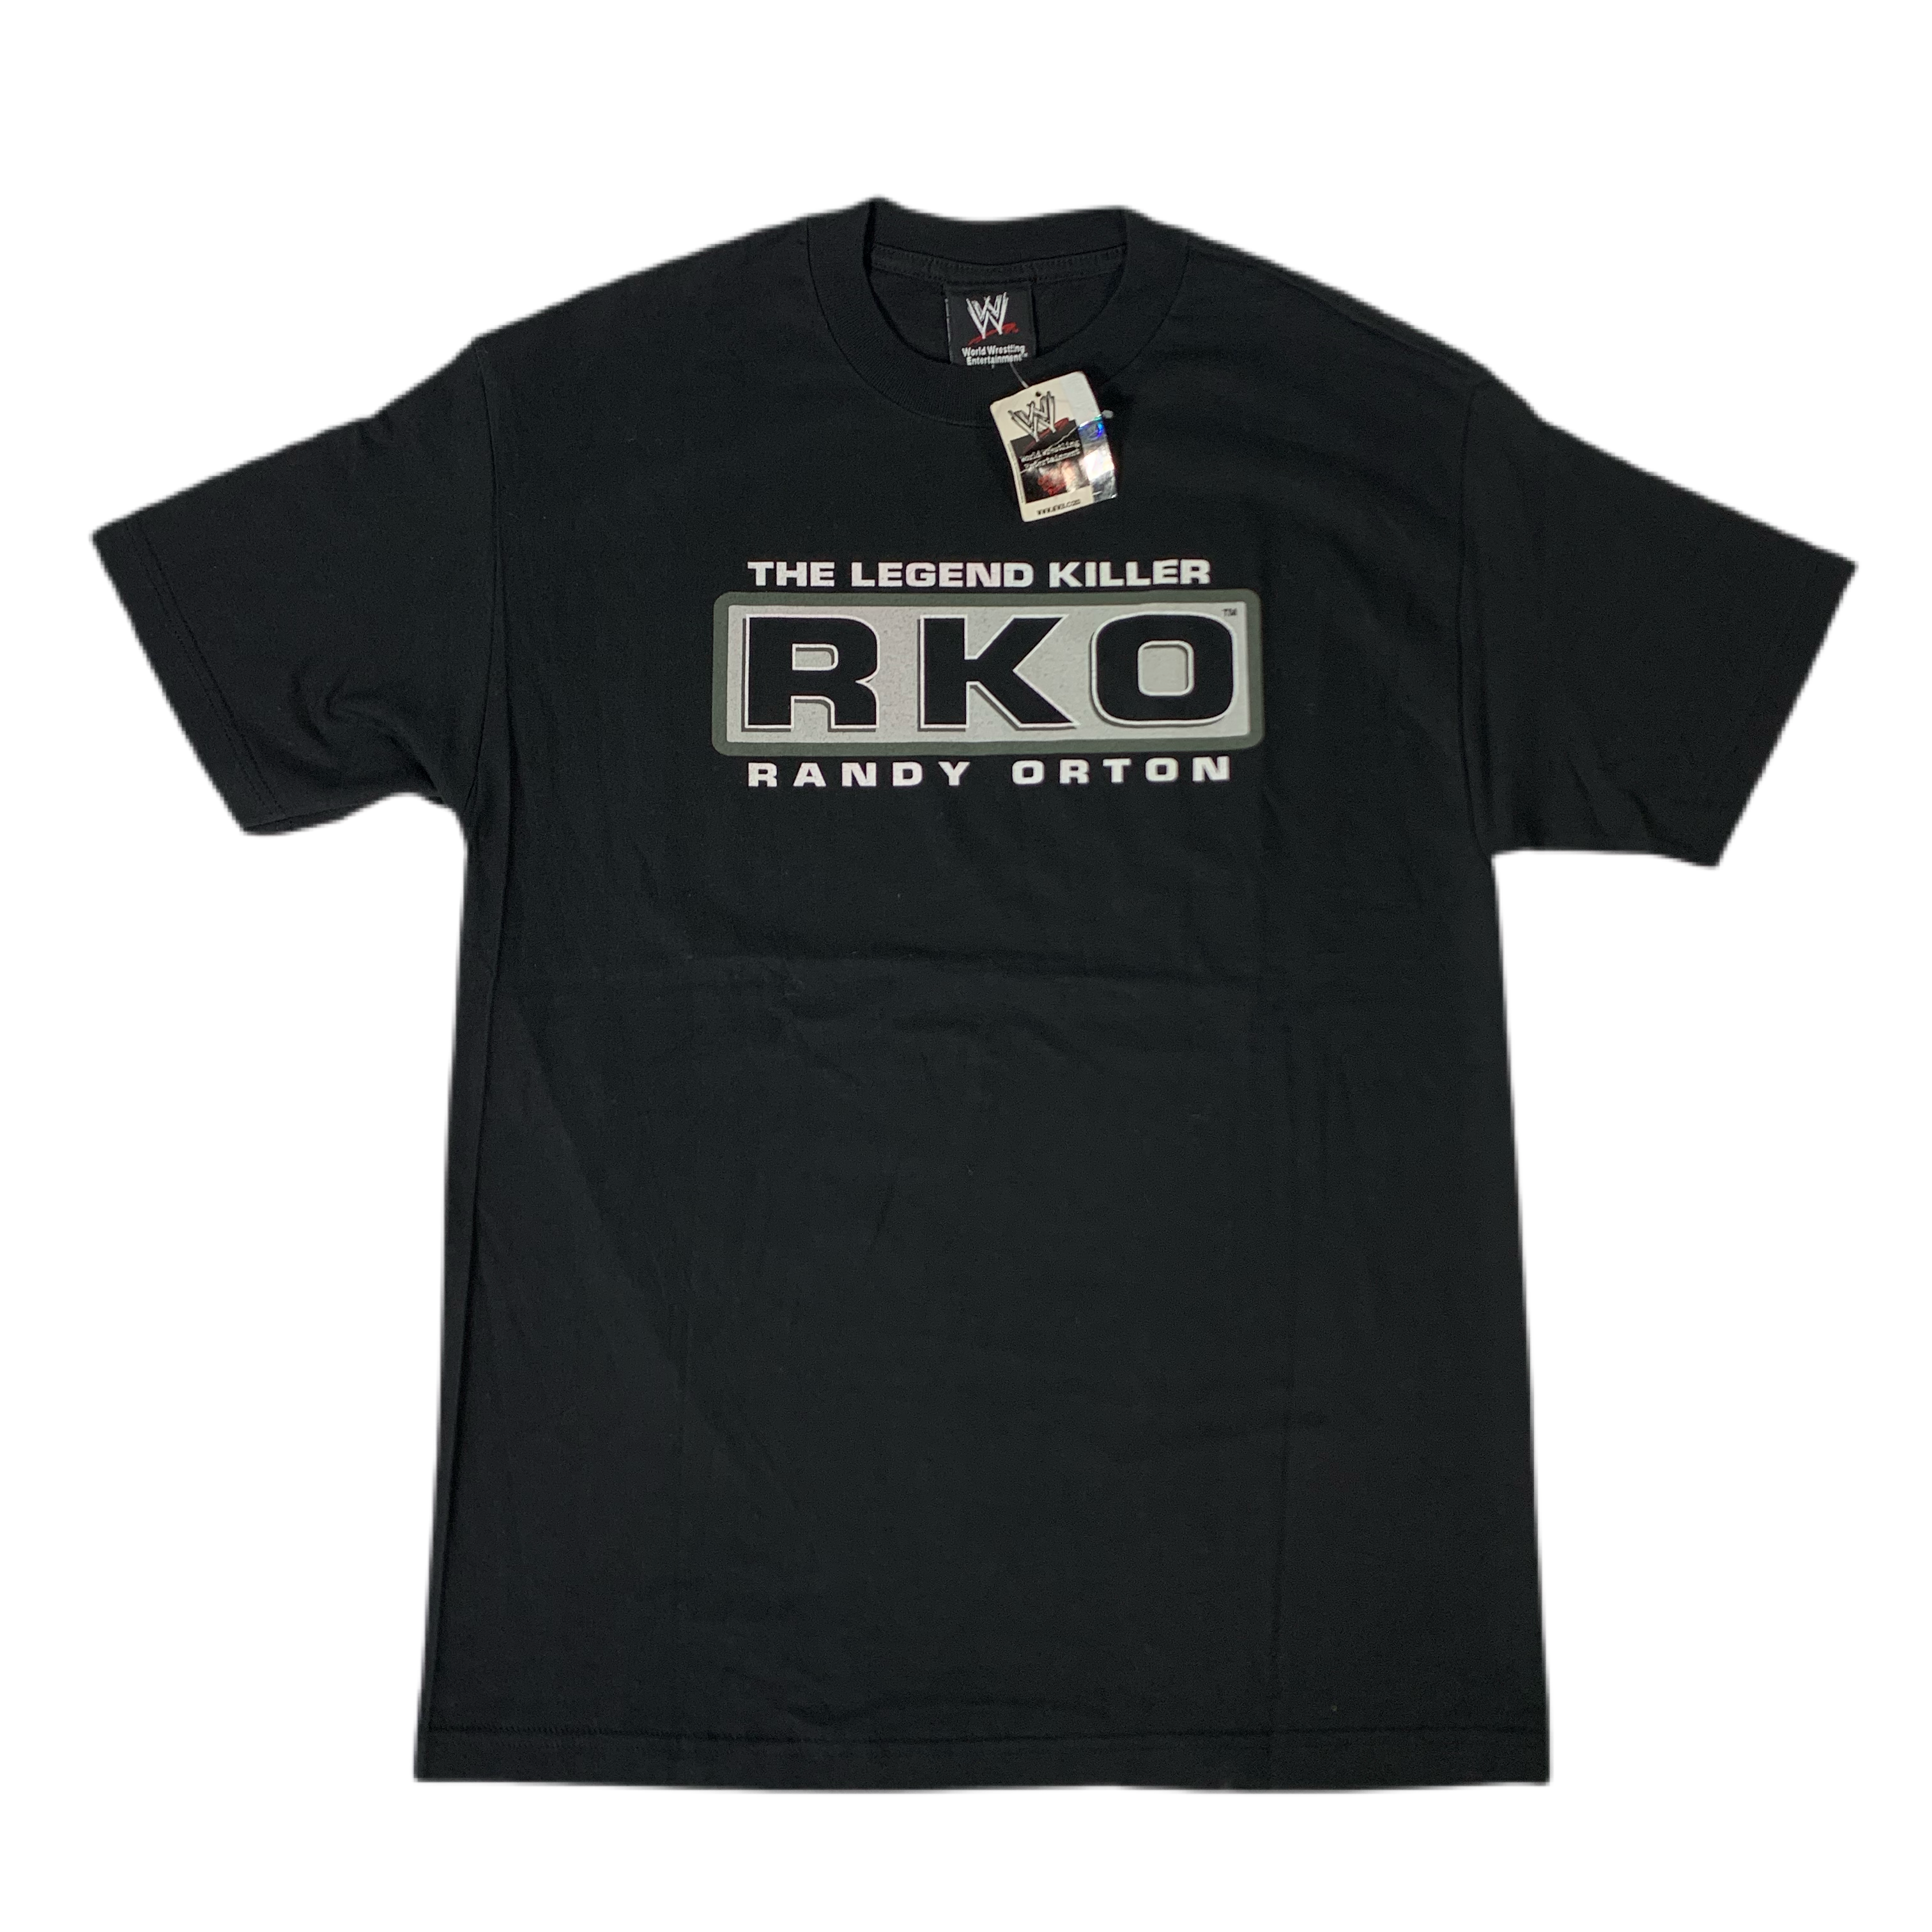 Vintage Randy Orton “The Legend Killer” T-Shirt